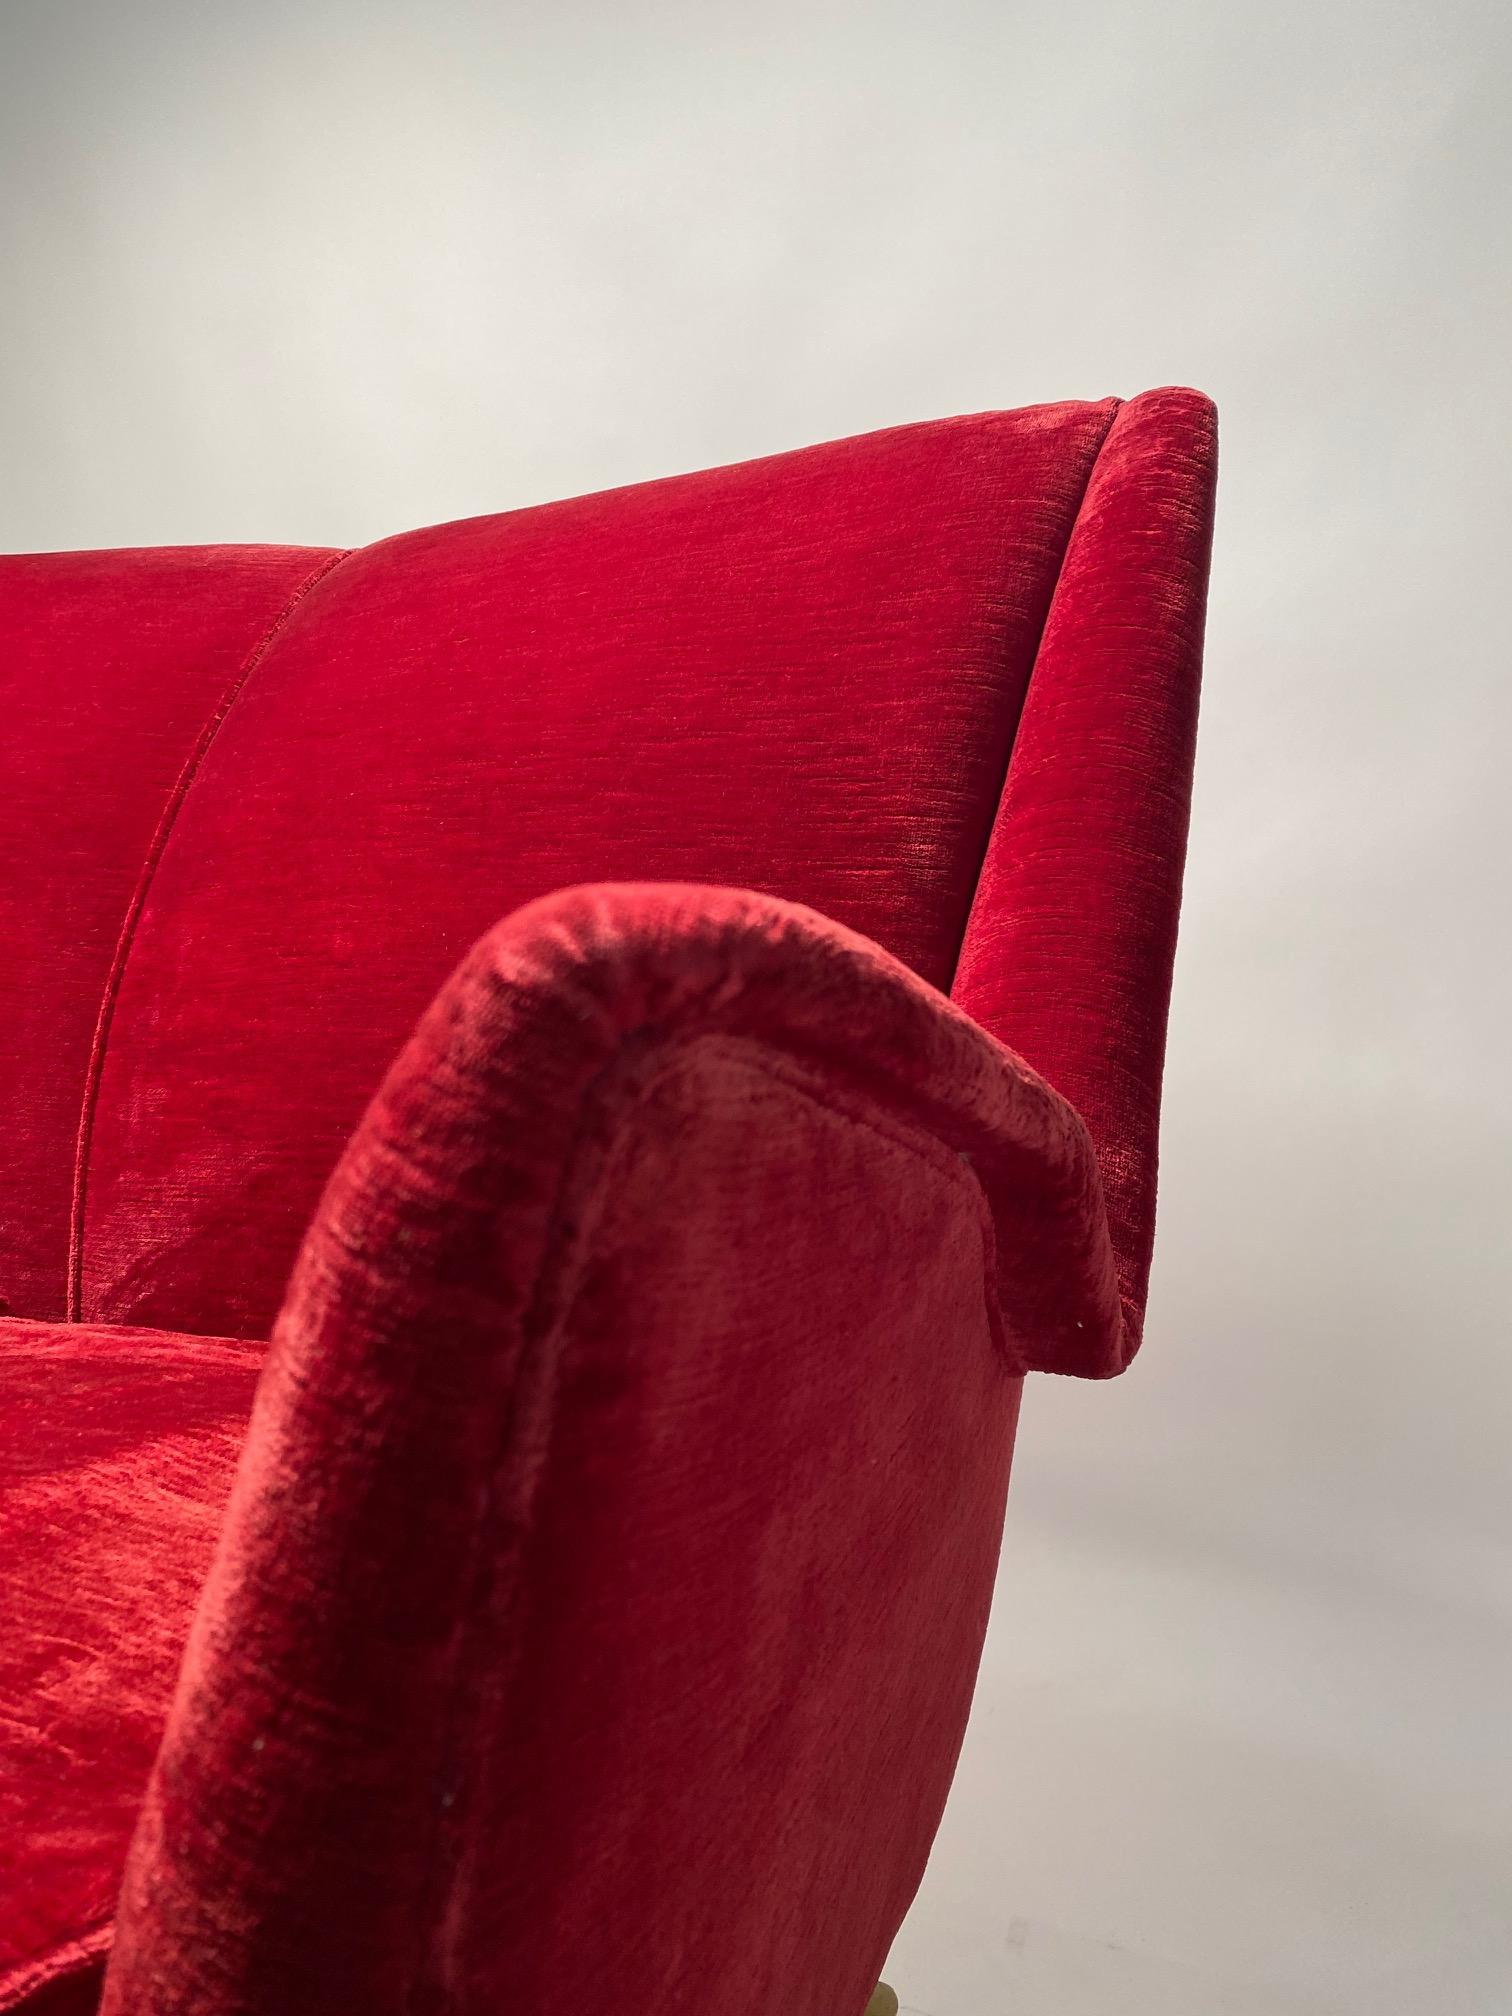 Mid-Century Modern Italian Two-Seater Red Sofa, Produced by I.S.A. Bergamo, Att. Gio Ponti, 1950s For Sale